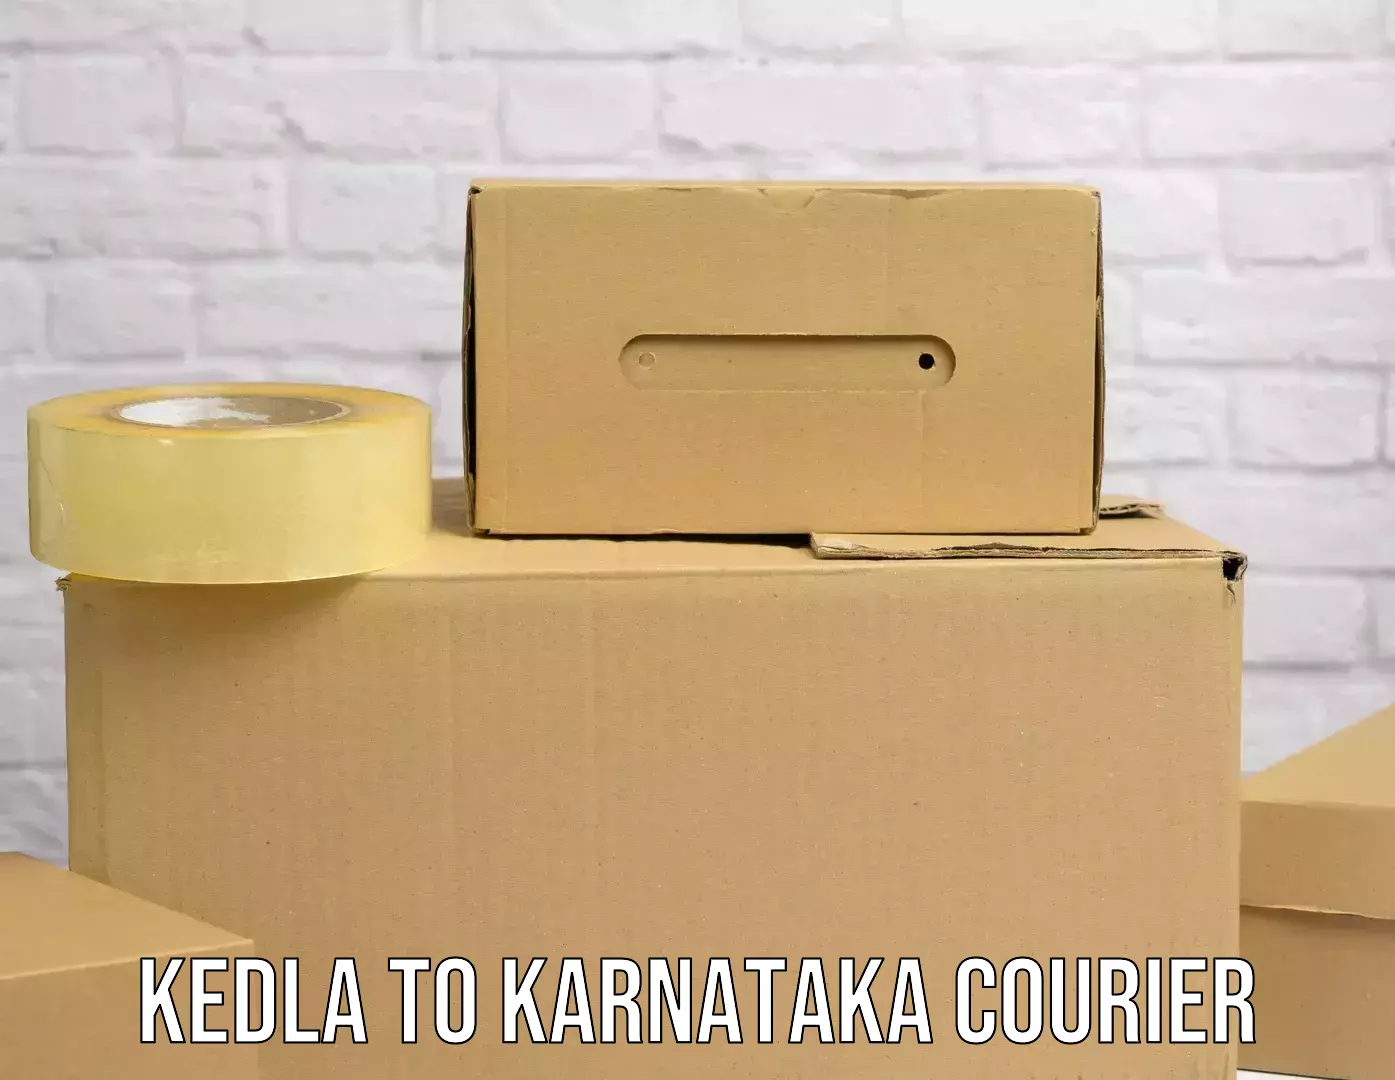 Modern delivery technologies Kedla to Karnataka